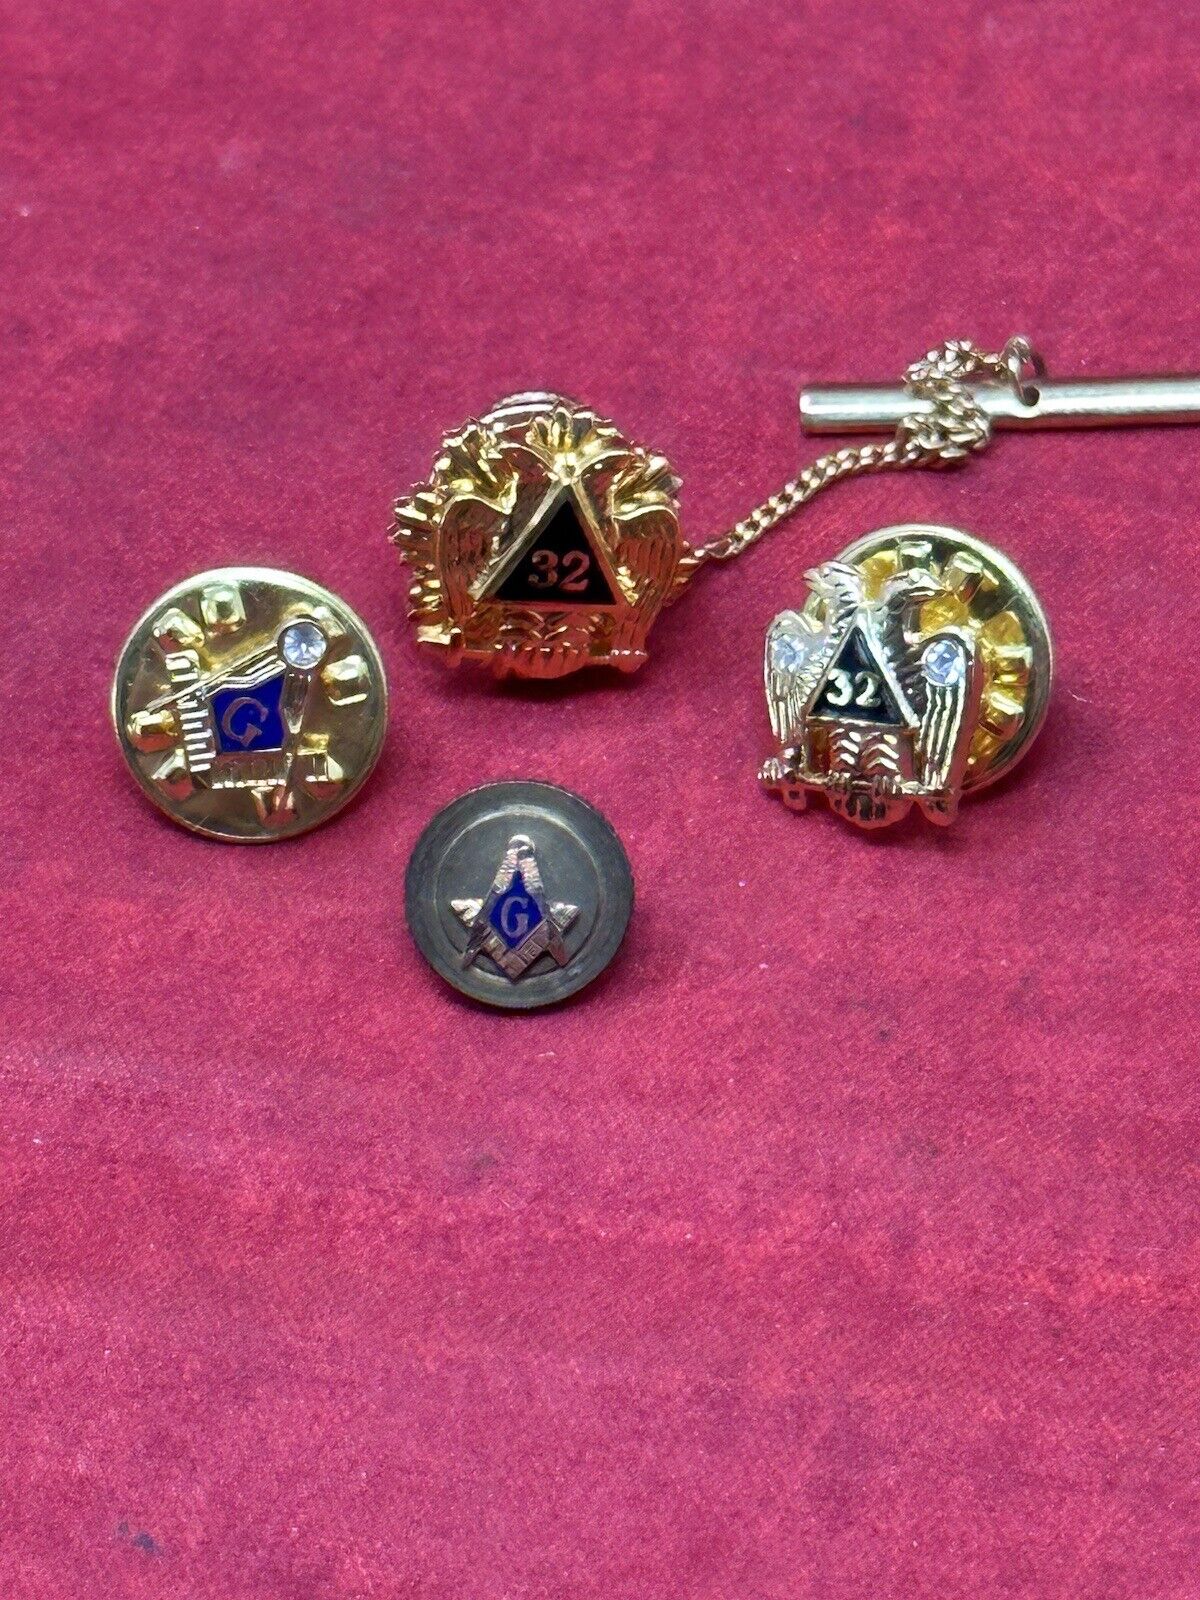 4 Free Mason 32nd Level Jewelry - Pins, Tie Tacks, Vintage